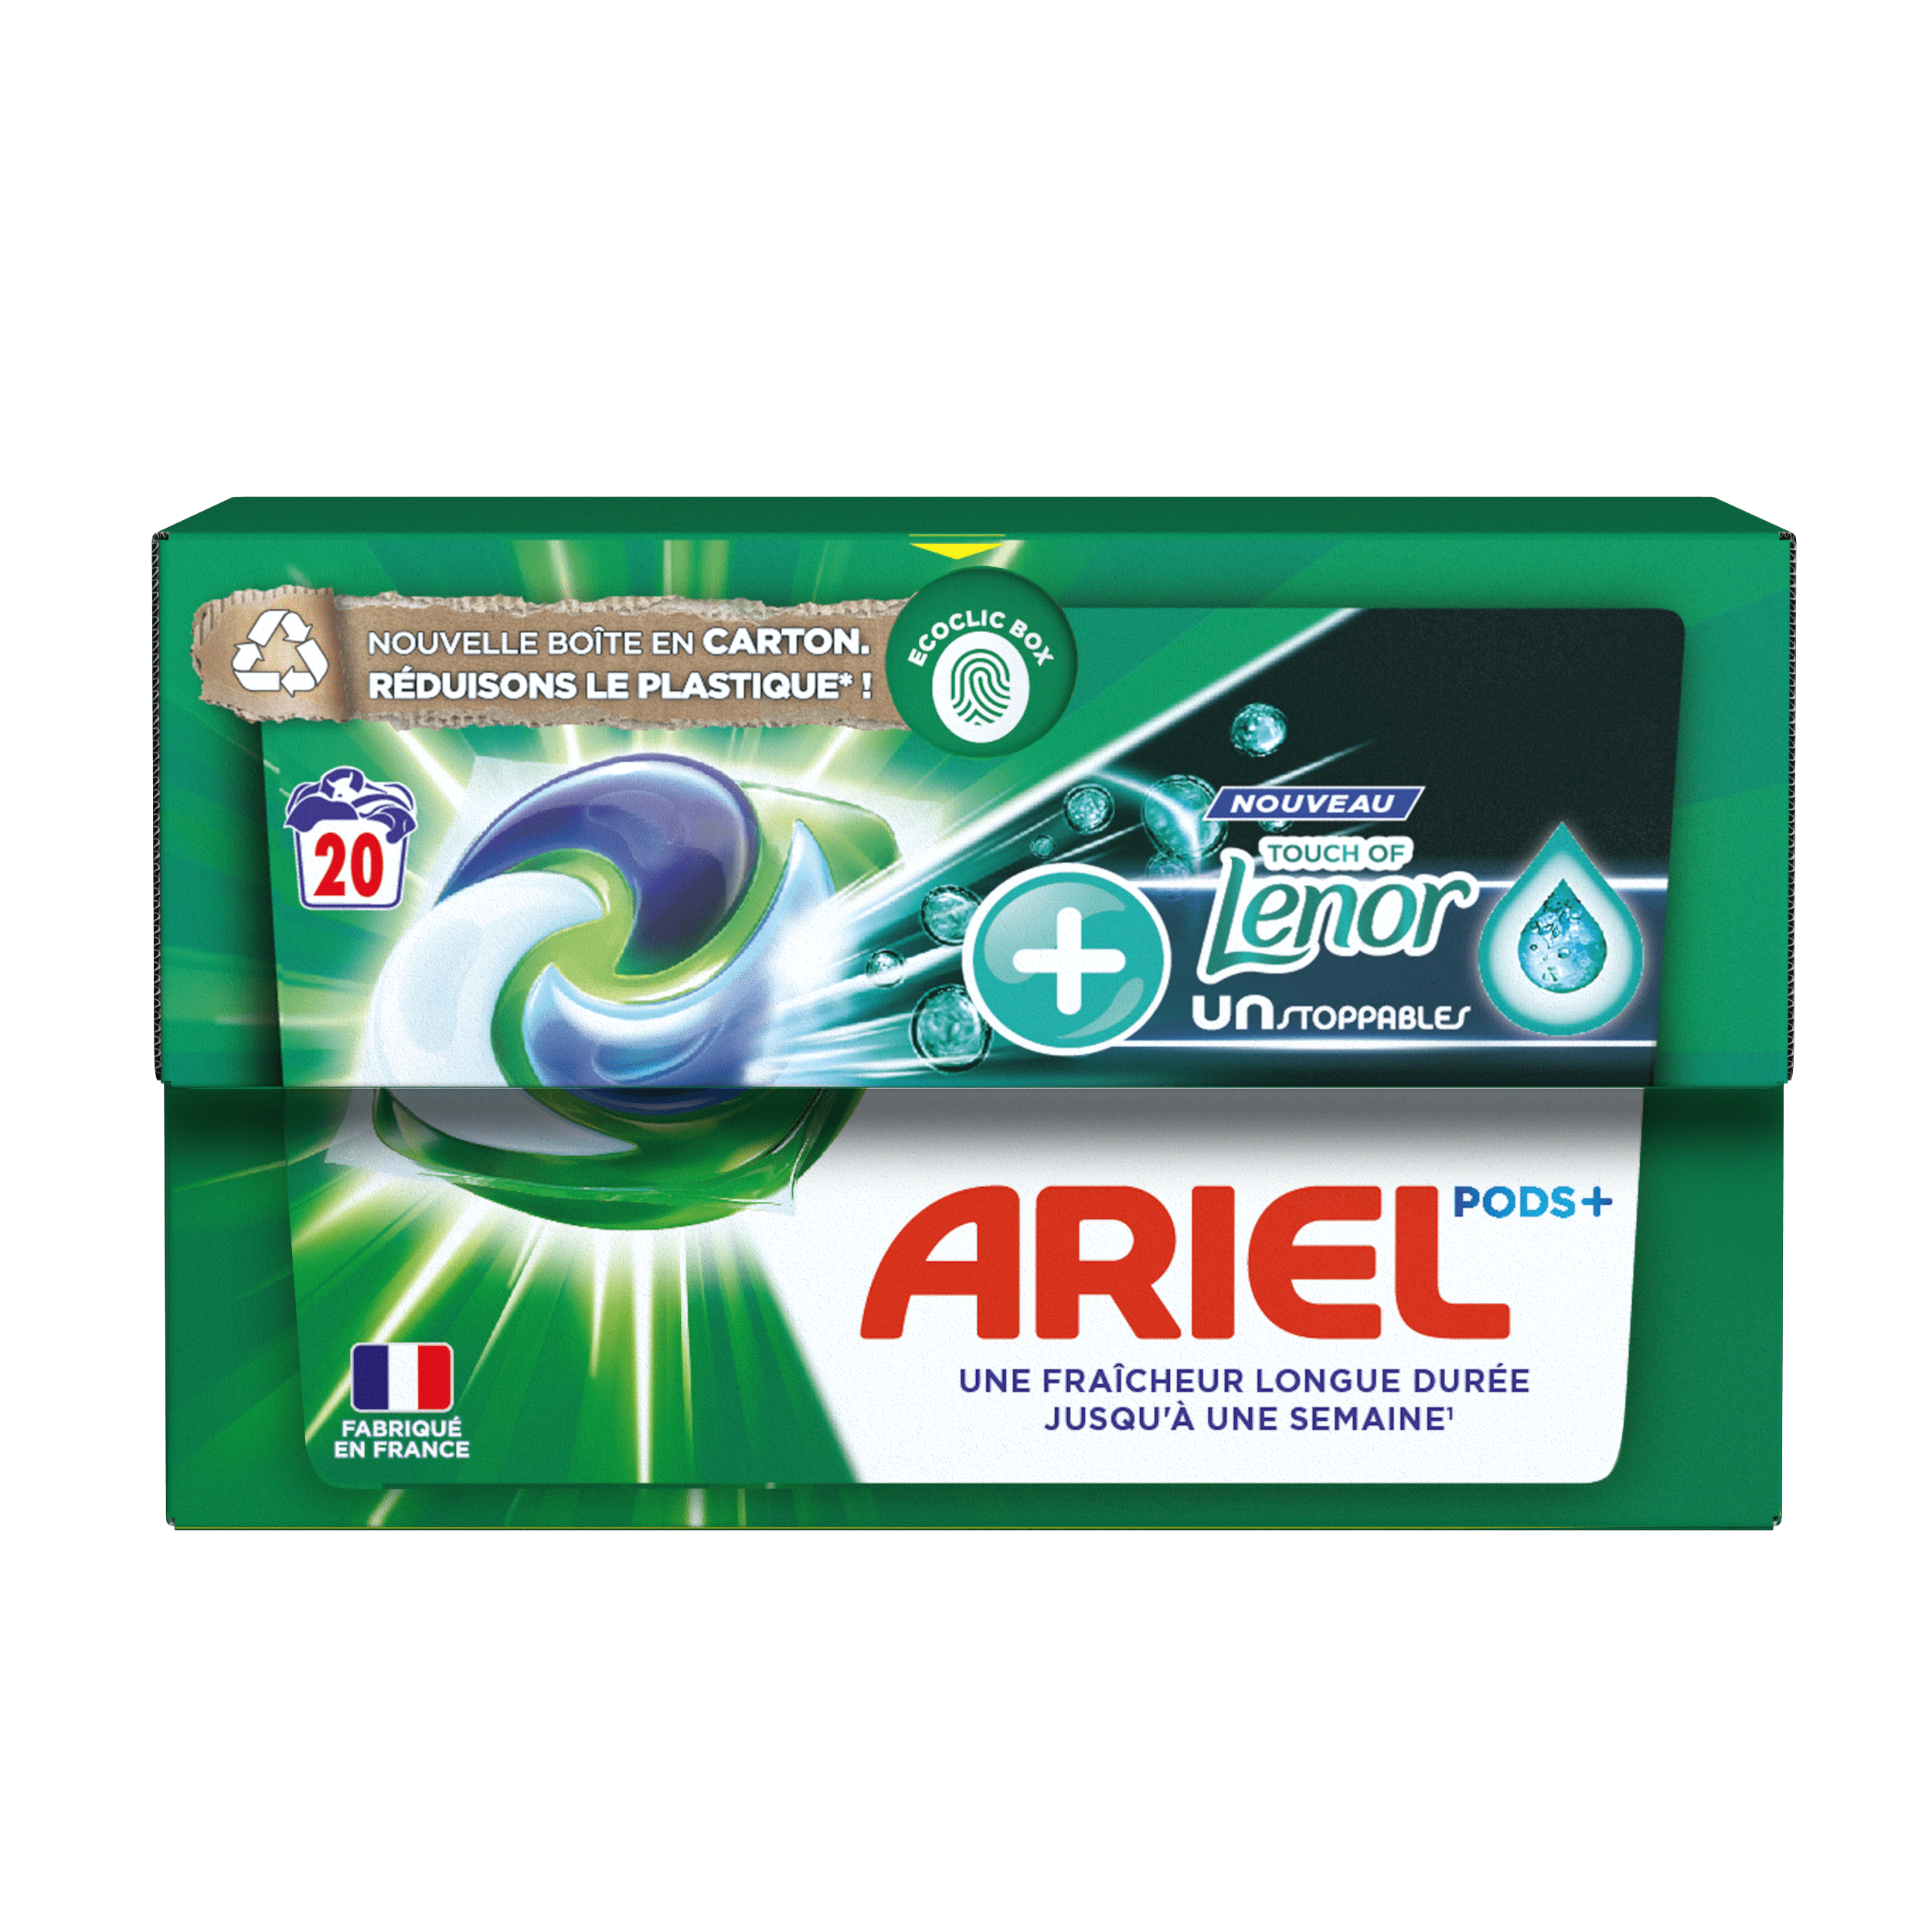 Ariel Allin1 Pods Lenor Unstoppables Air